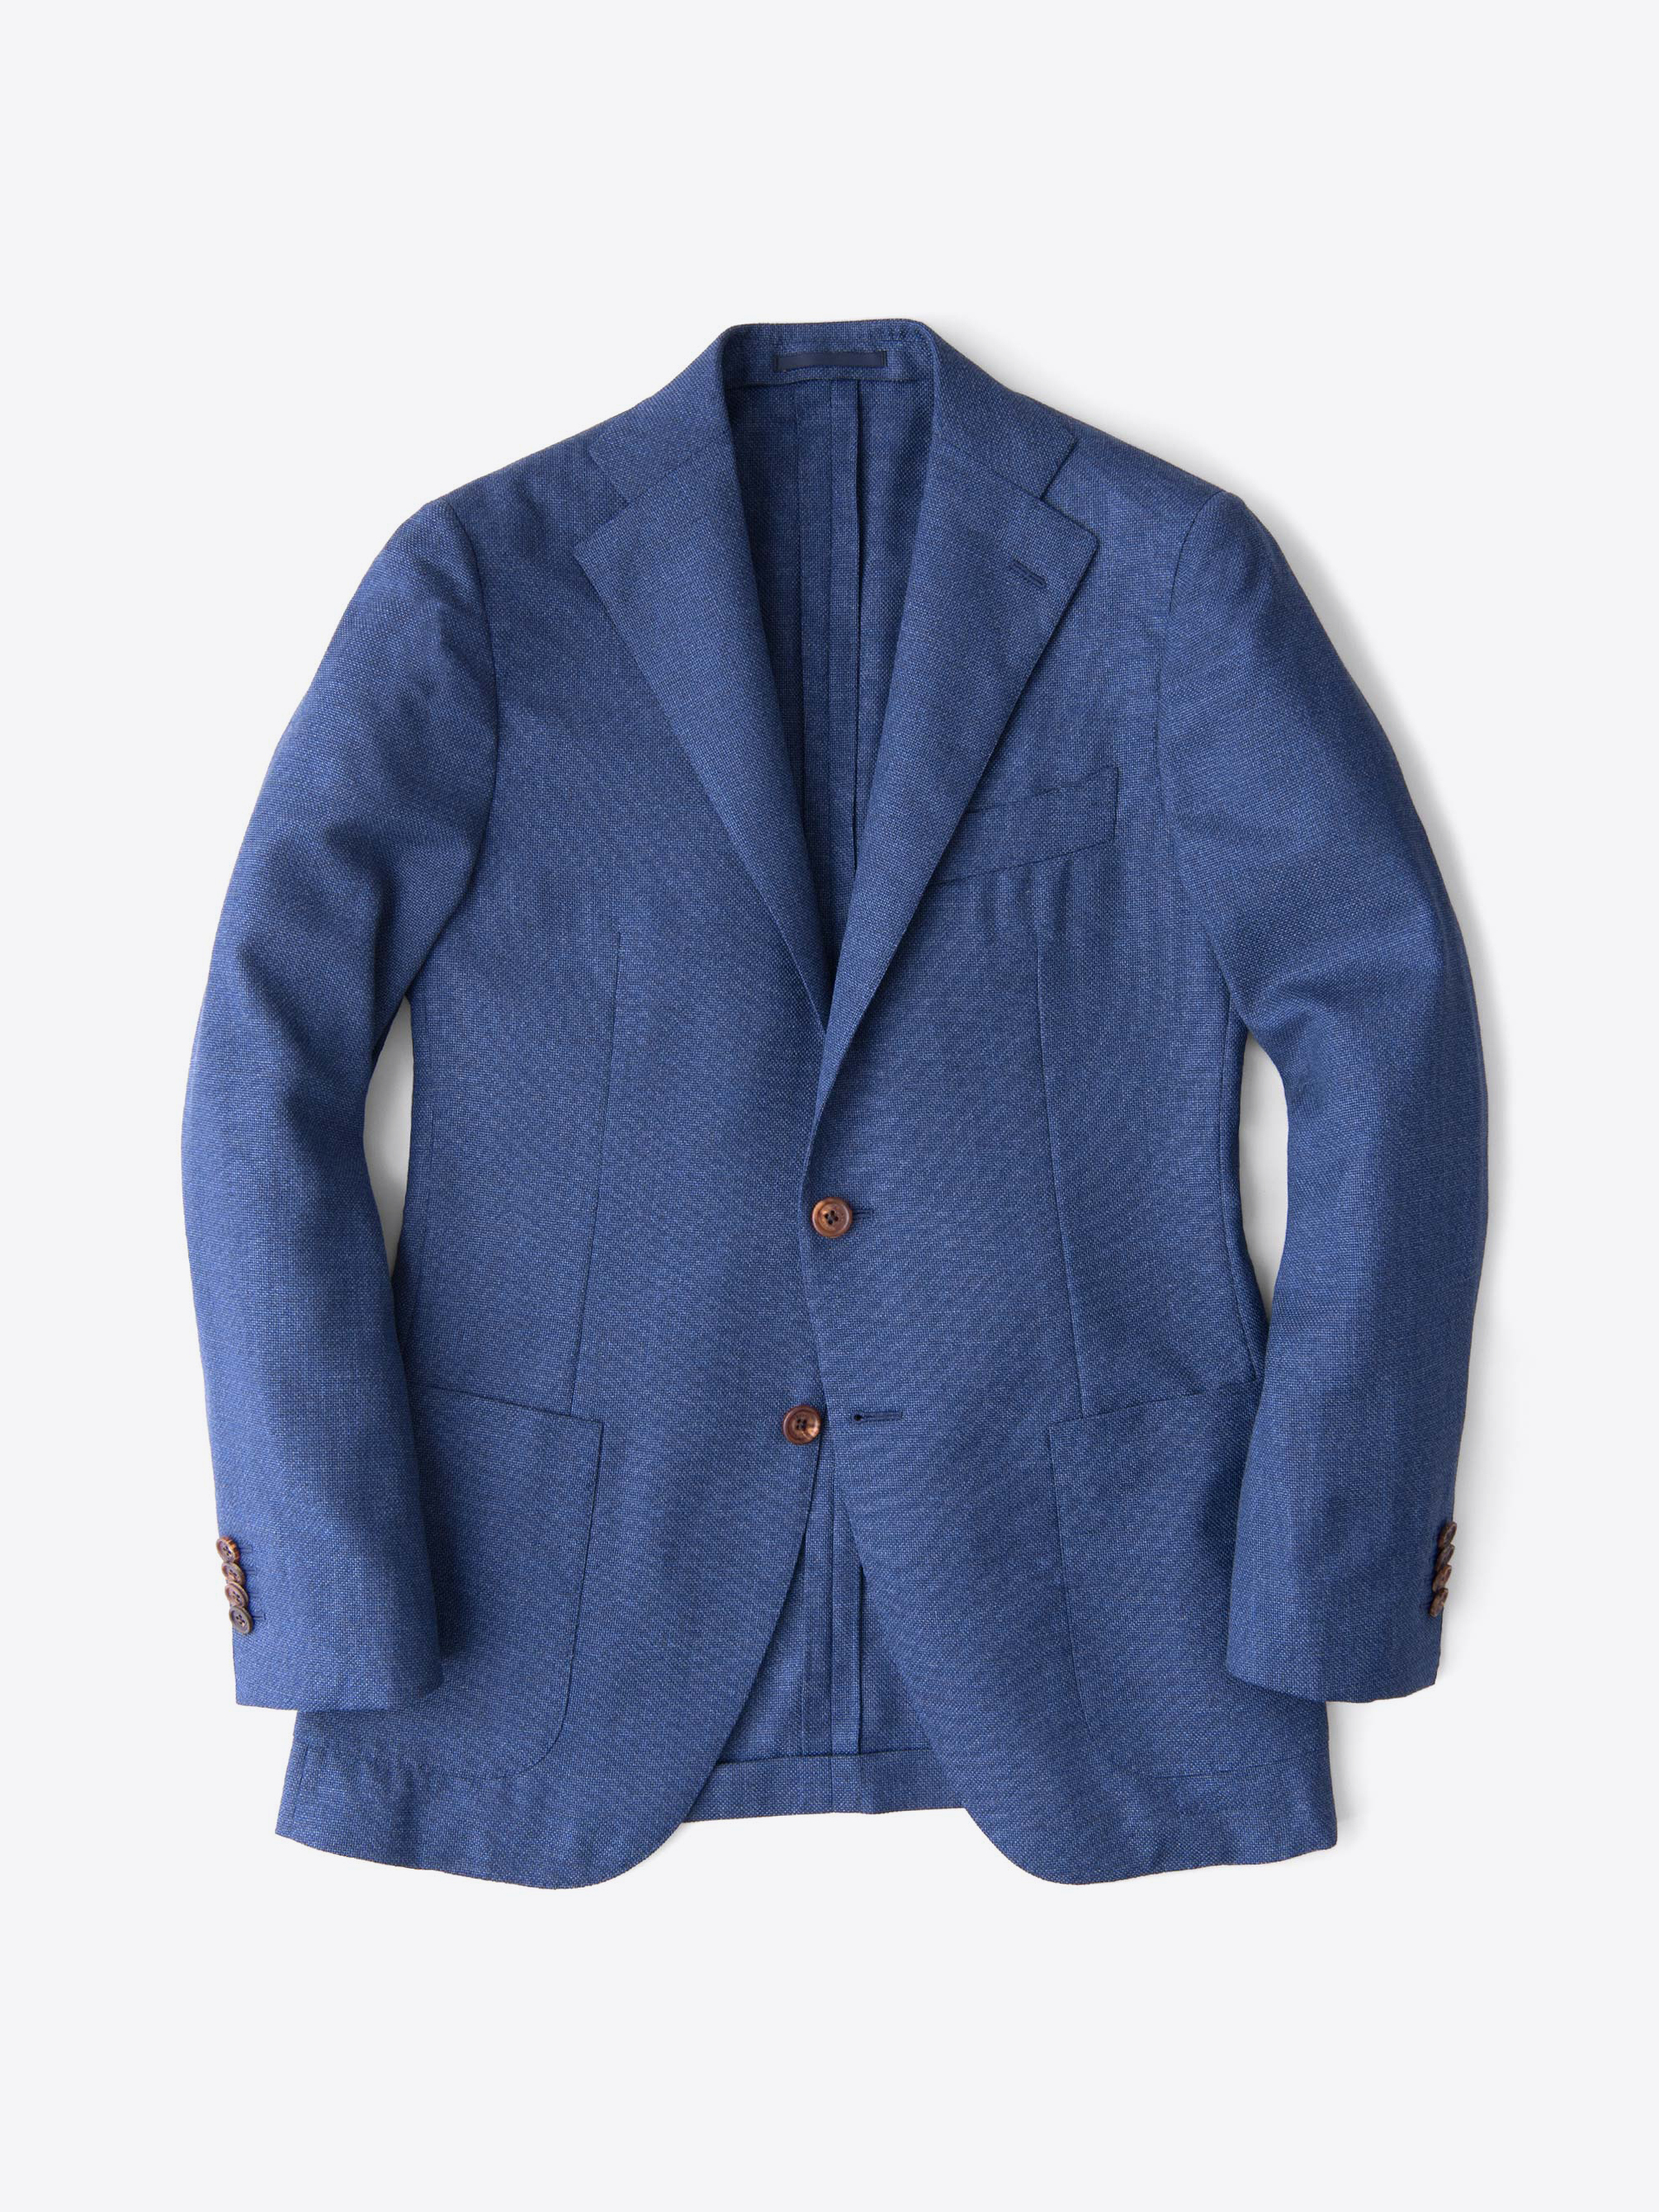 Zoom Image of Hudson Ocean Blue Melange Wool Hopsack Jacket